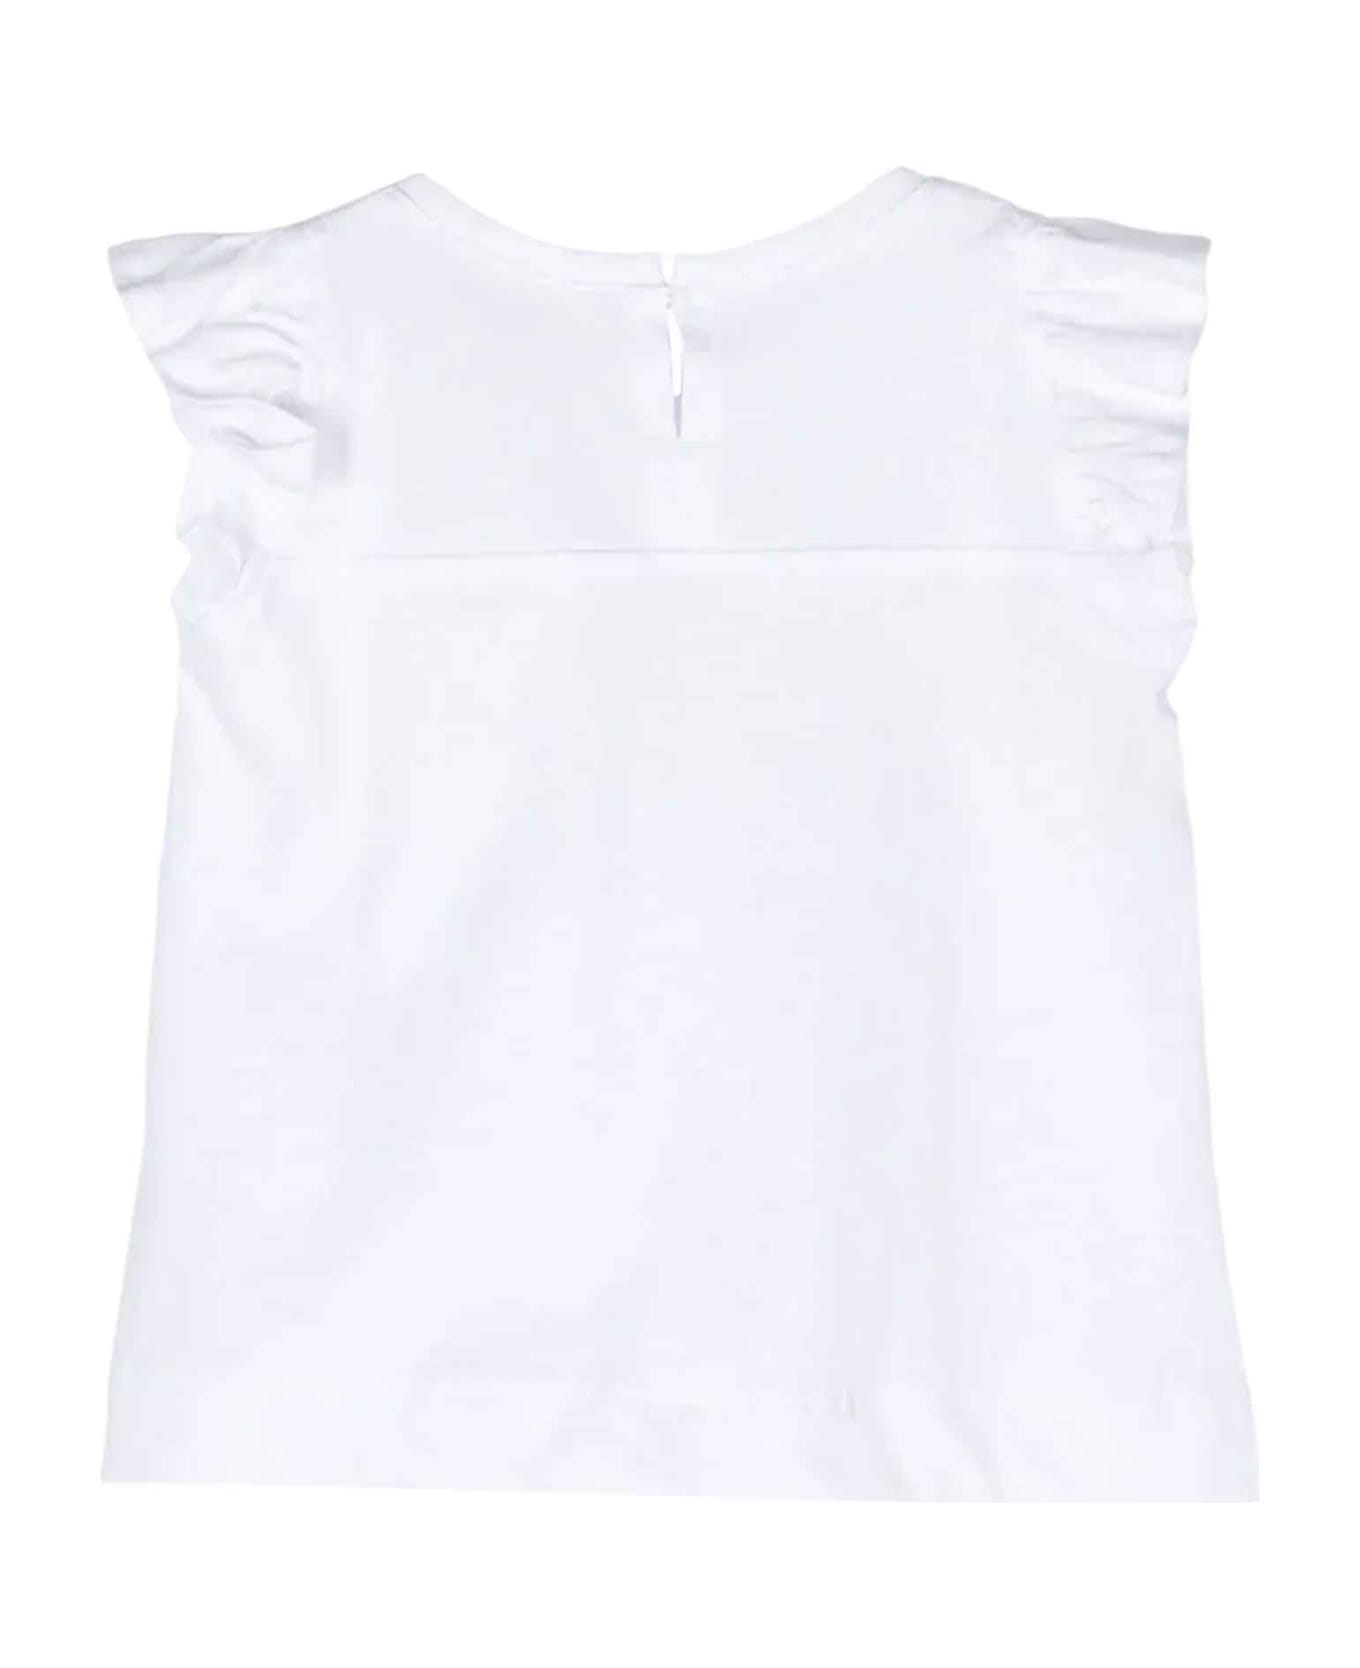 Chiara Ferragni White T-shirt Baby Girl - Bianco